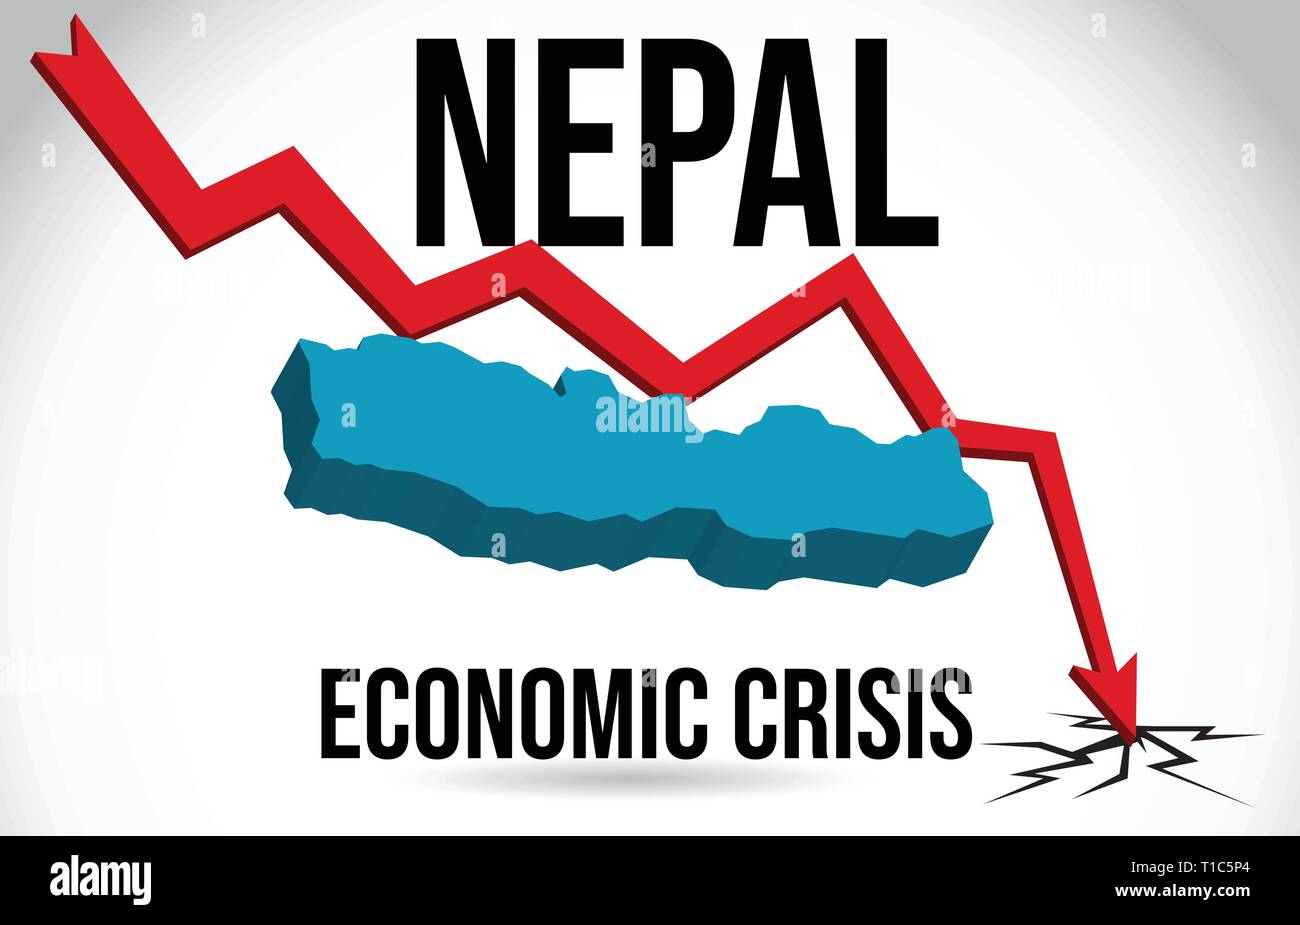 Nepal Map Financial Crisis Economic Collapse Market Crash Global Meltdown Vector Illustration. Stock Vector